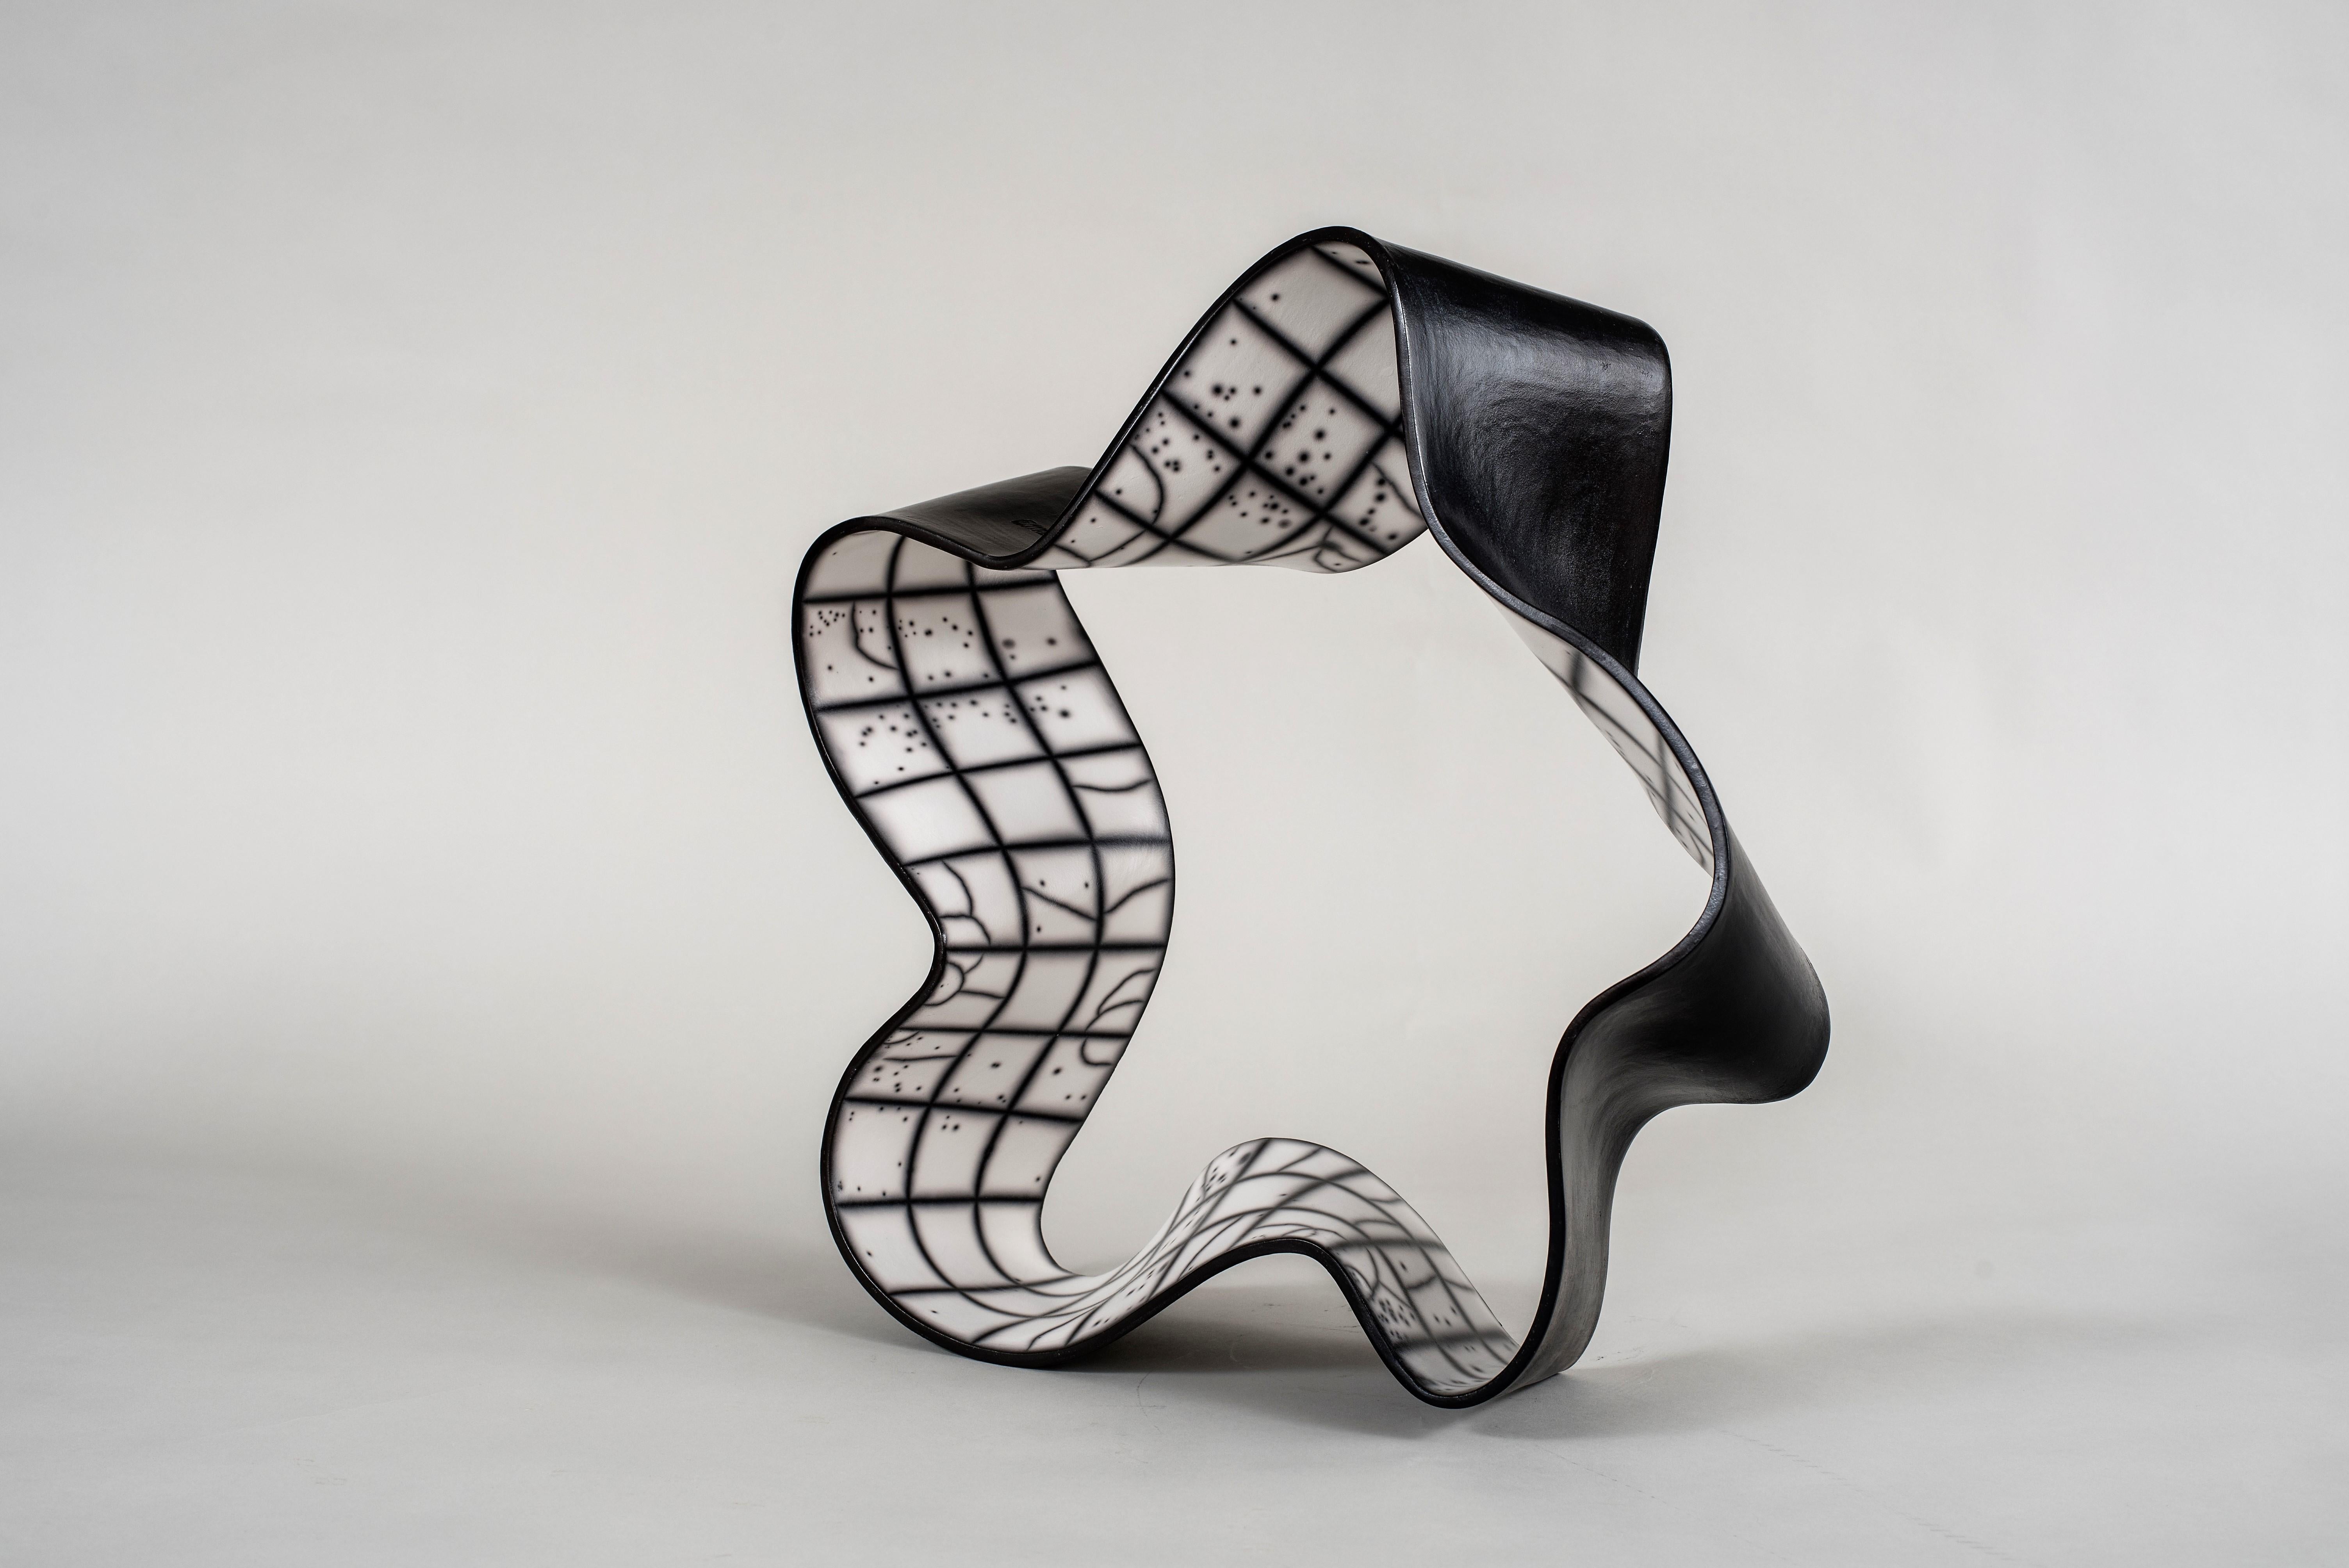 Minimalist Contemporary Black and White Ceramic Sculpture For Sale